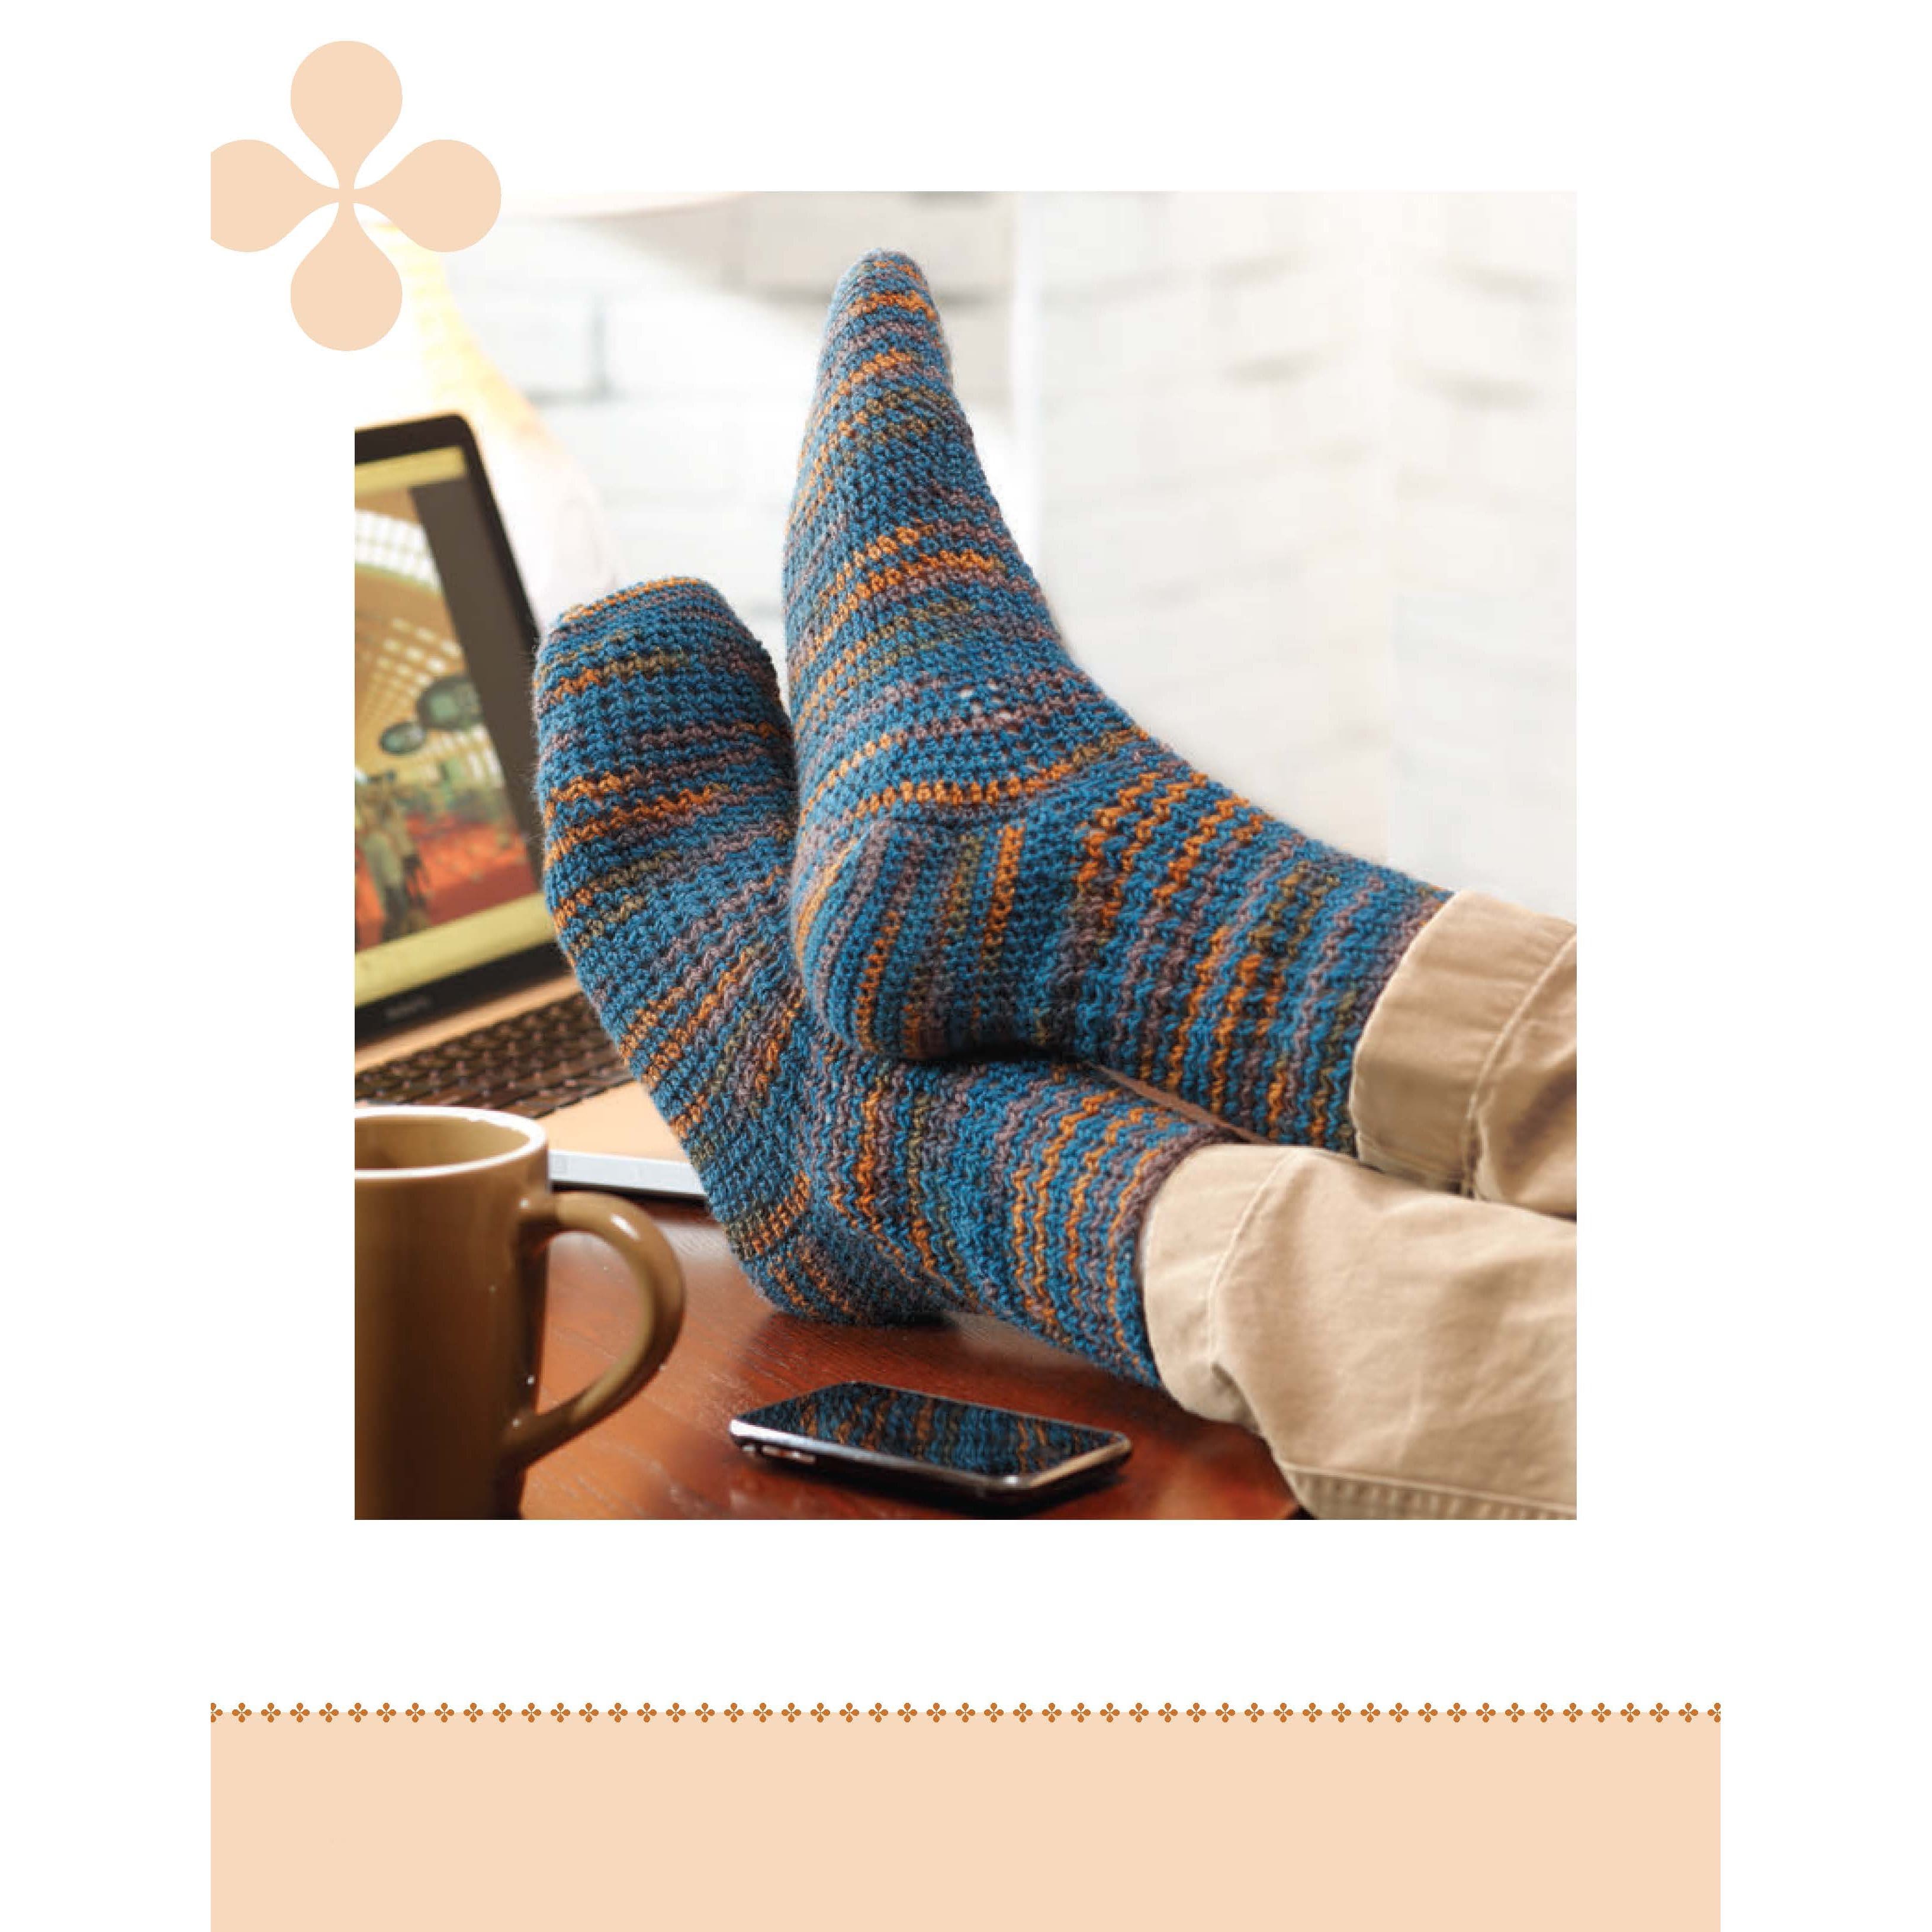 Leisure Arts&#xAE; I Can&#x27;t Believe I&#x27;m Crocheting Socks Book